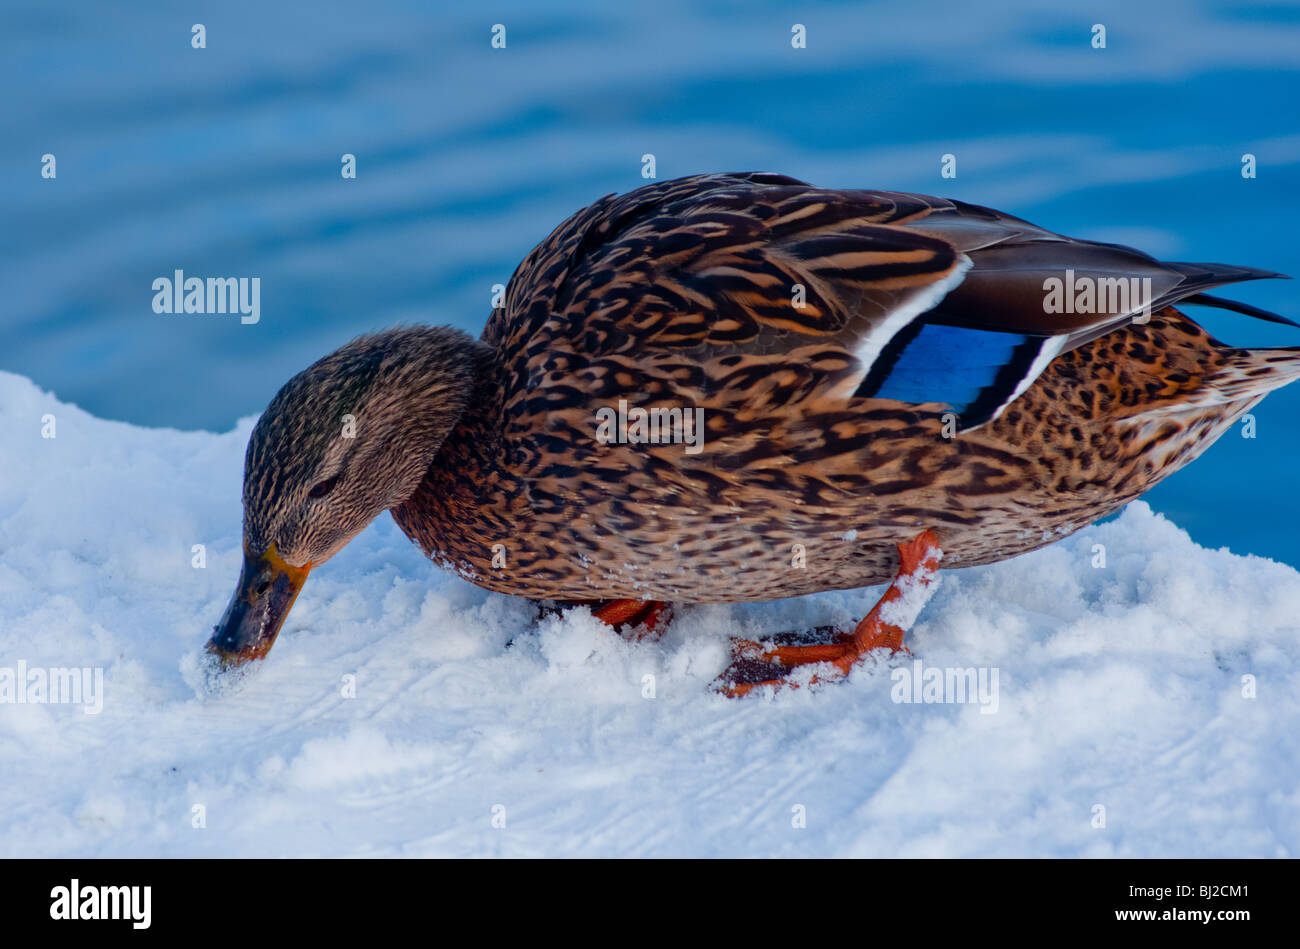 Snow eating duck Stock Photo